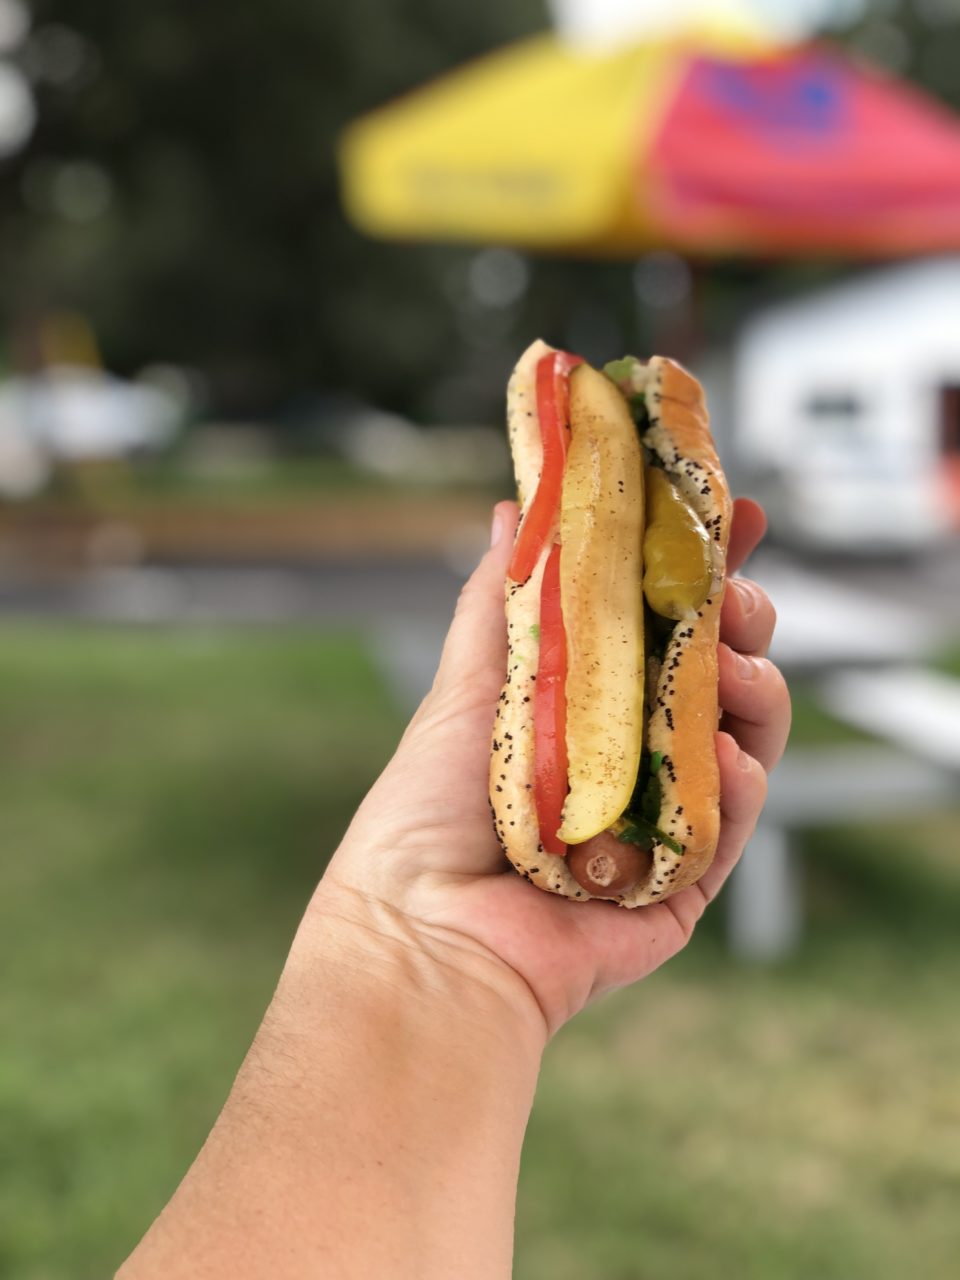 Best Hot Dogs in St. Petersburg FL 2019